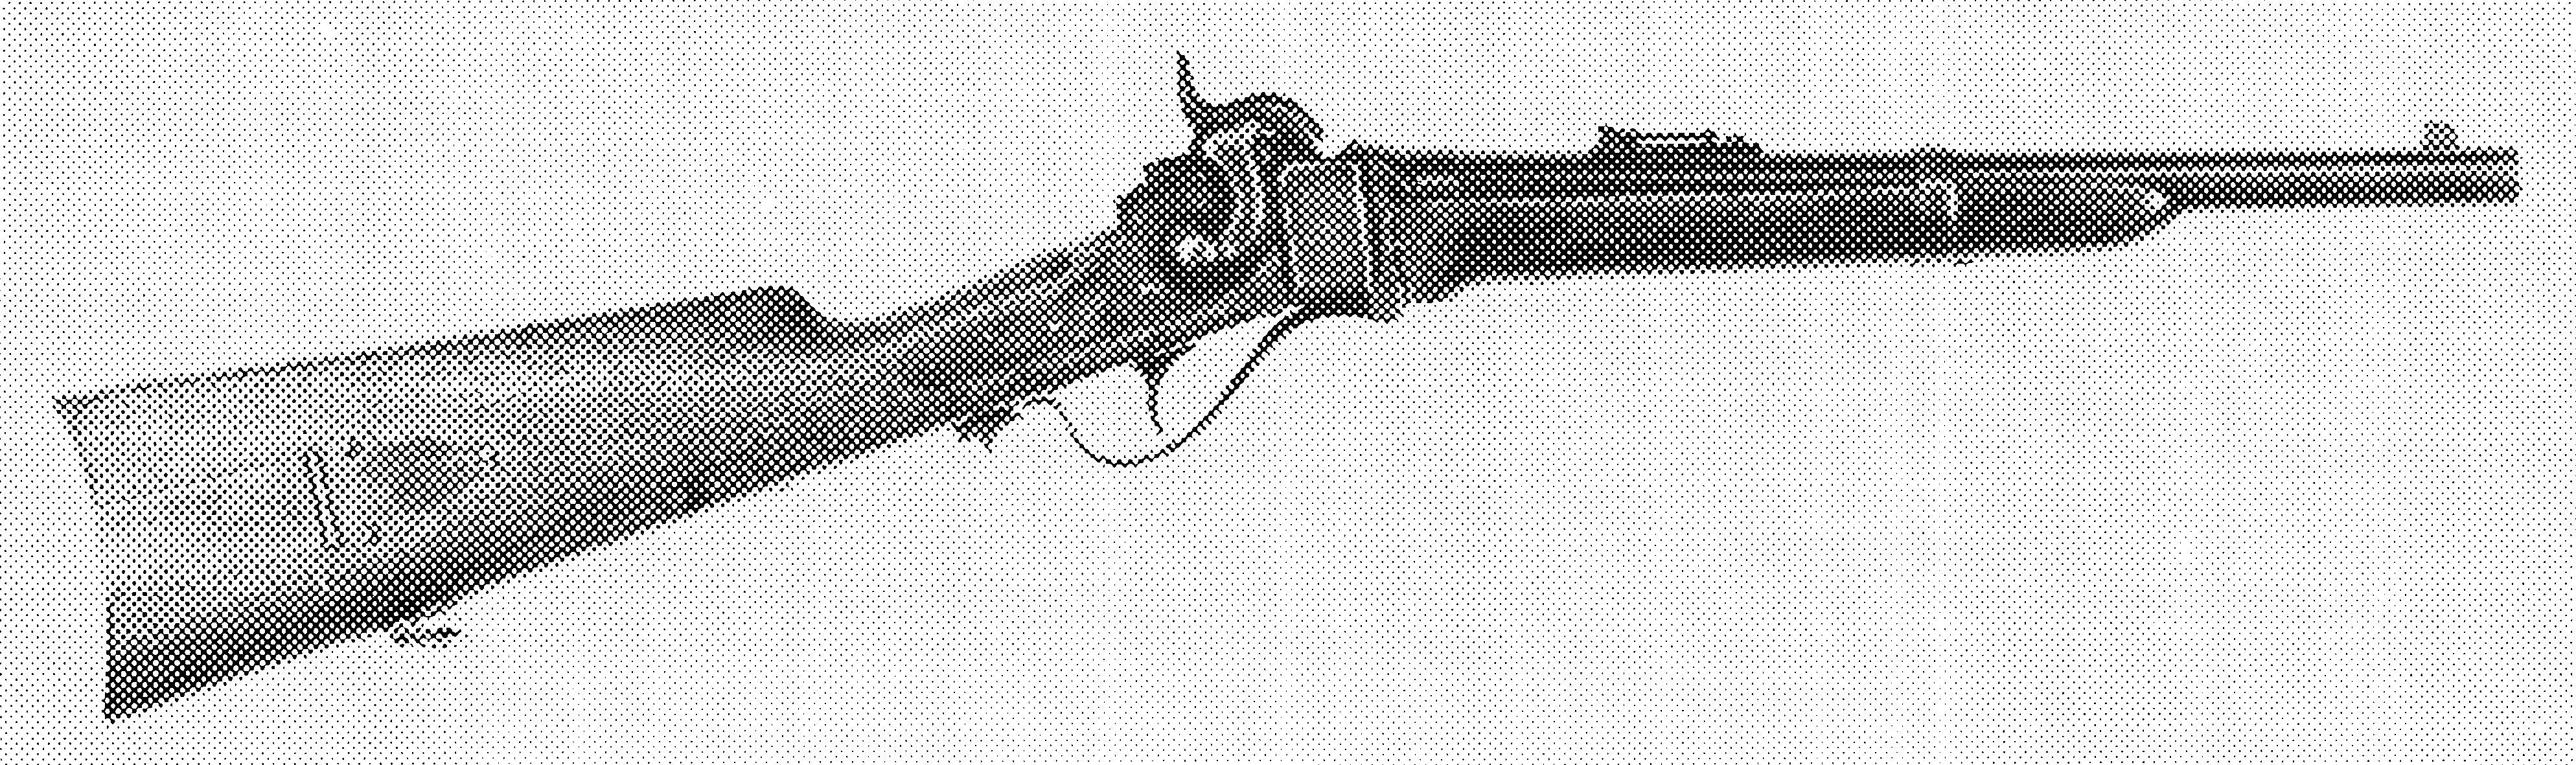 Model 1859 Carbine